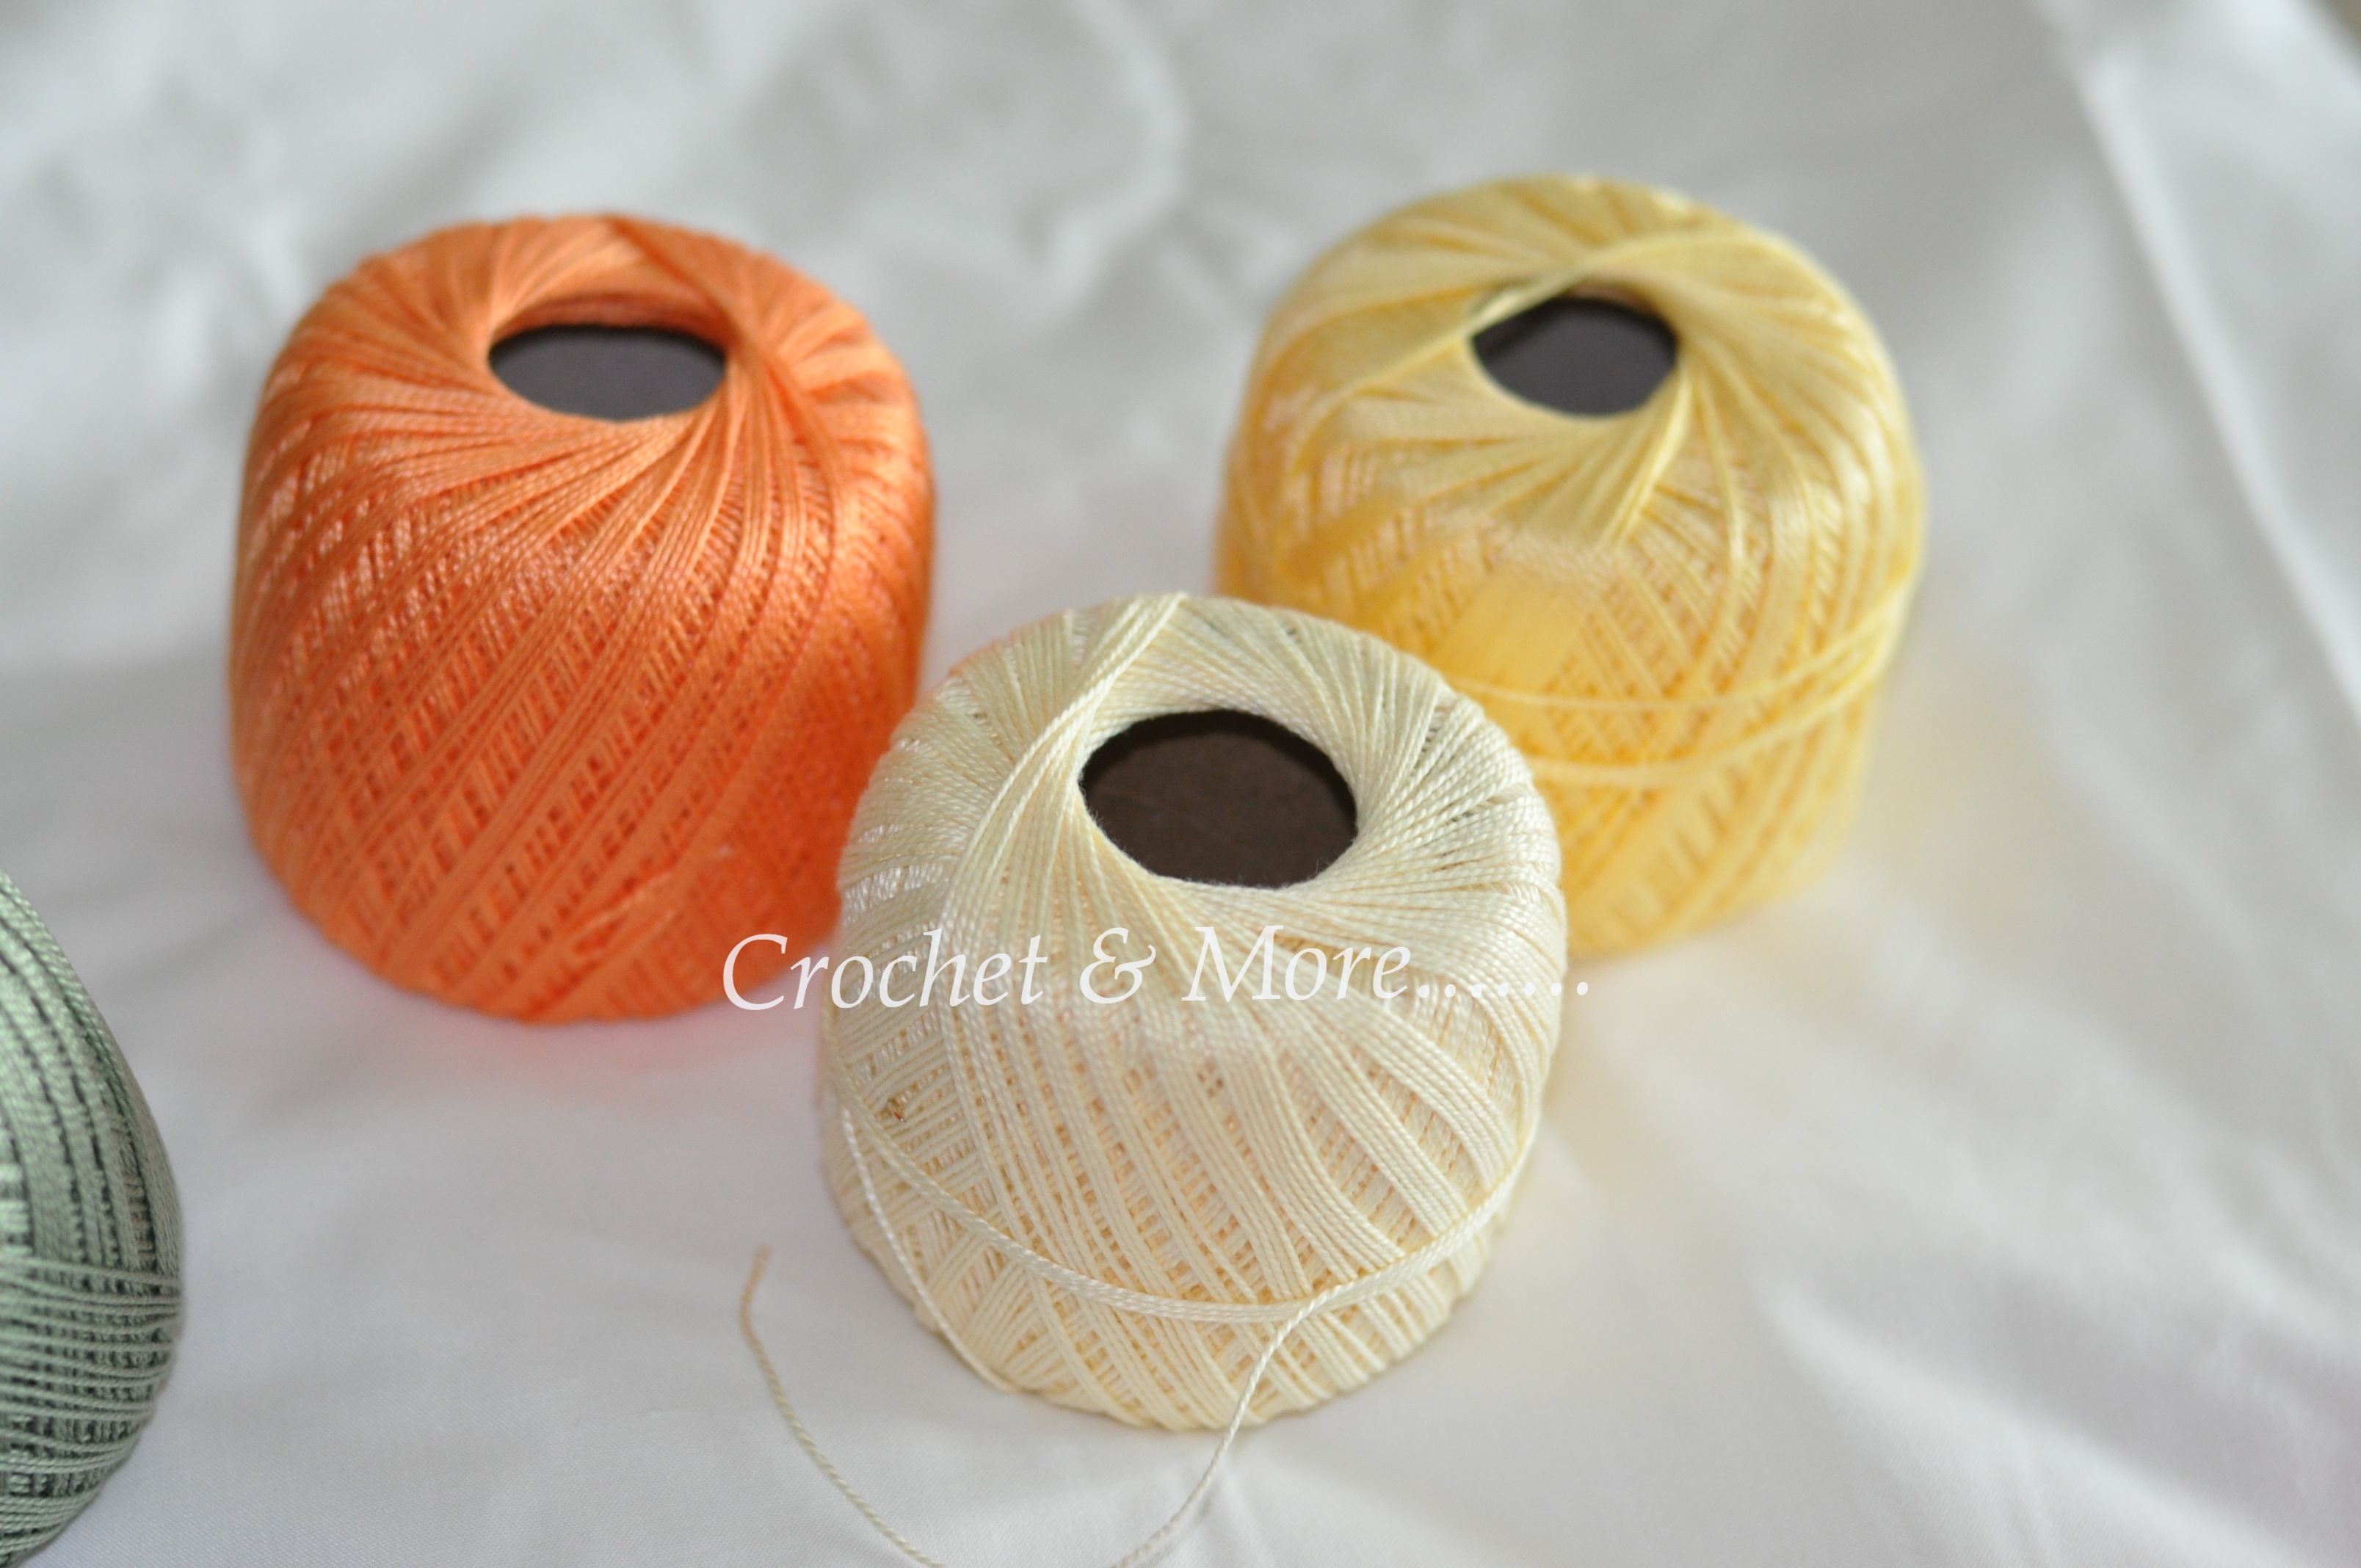 crochet thread conversion chart